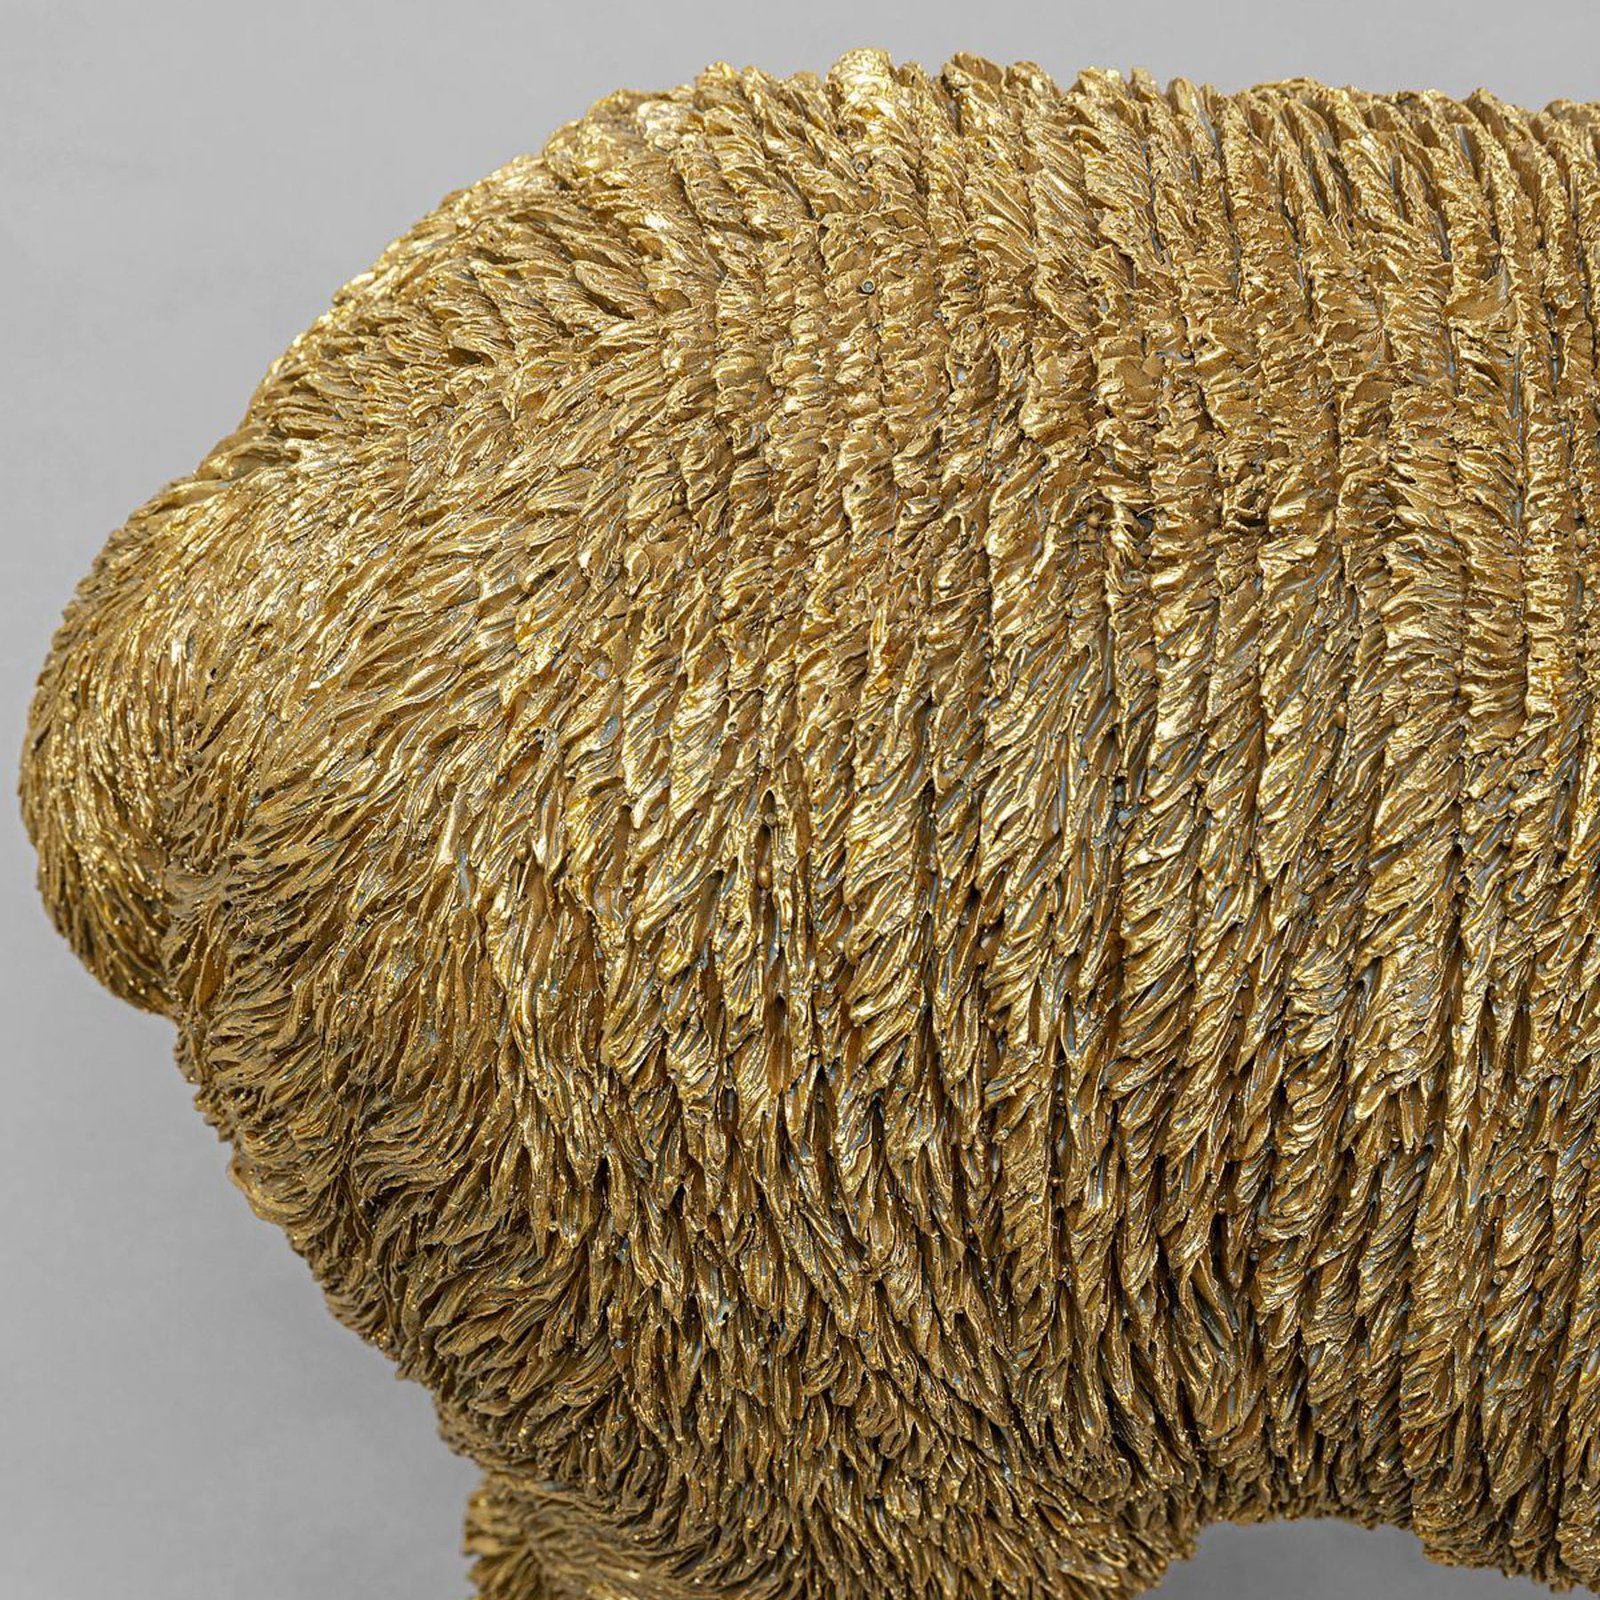 Kare Alpaca tafellamp, goud, kap van bruin textiel